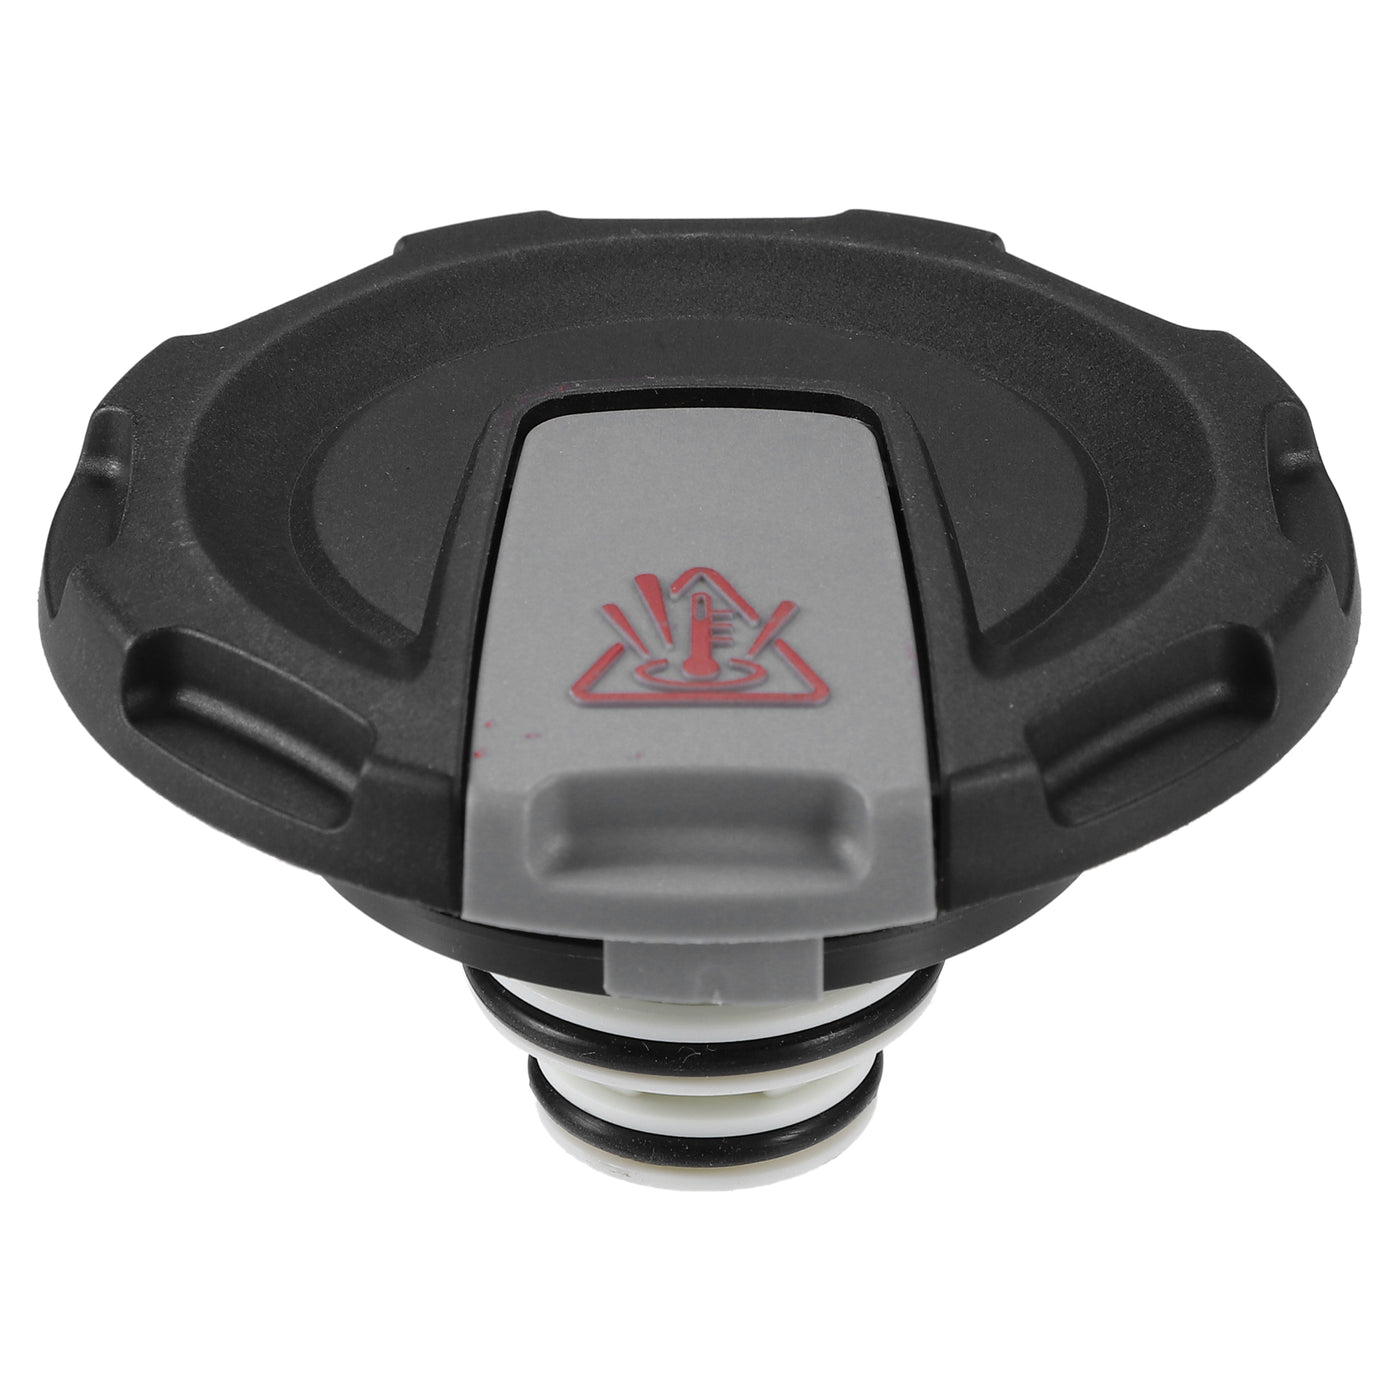 ACROPIX Windshield Washer Fluid Reservoir Bottle Cap Cover Fit for Audi A4/A4 Allroad 2017-2020 No.4M0121321E/4M0121321K - Pack of 1 Black